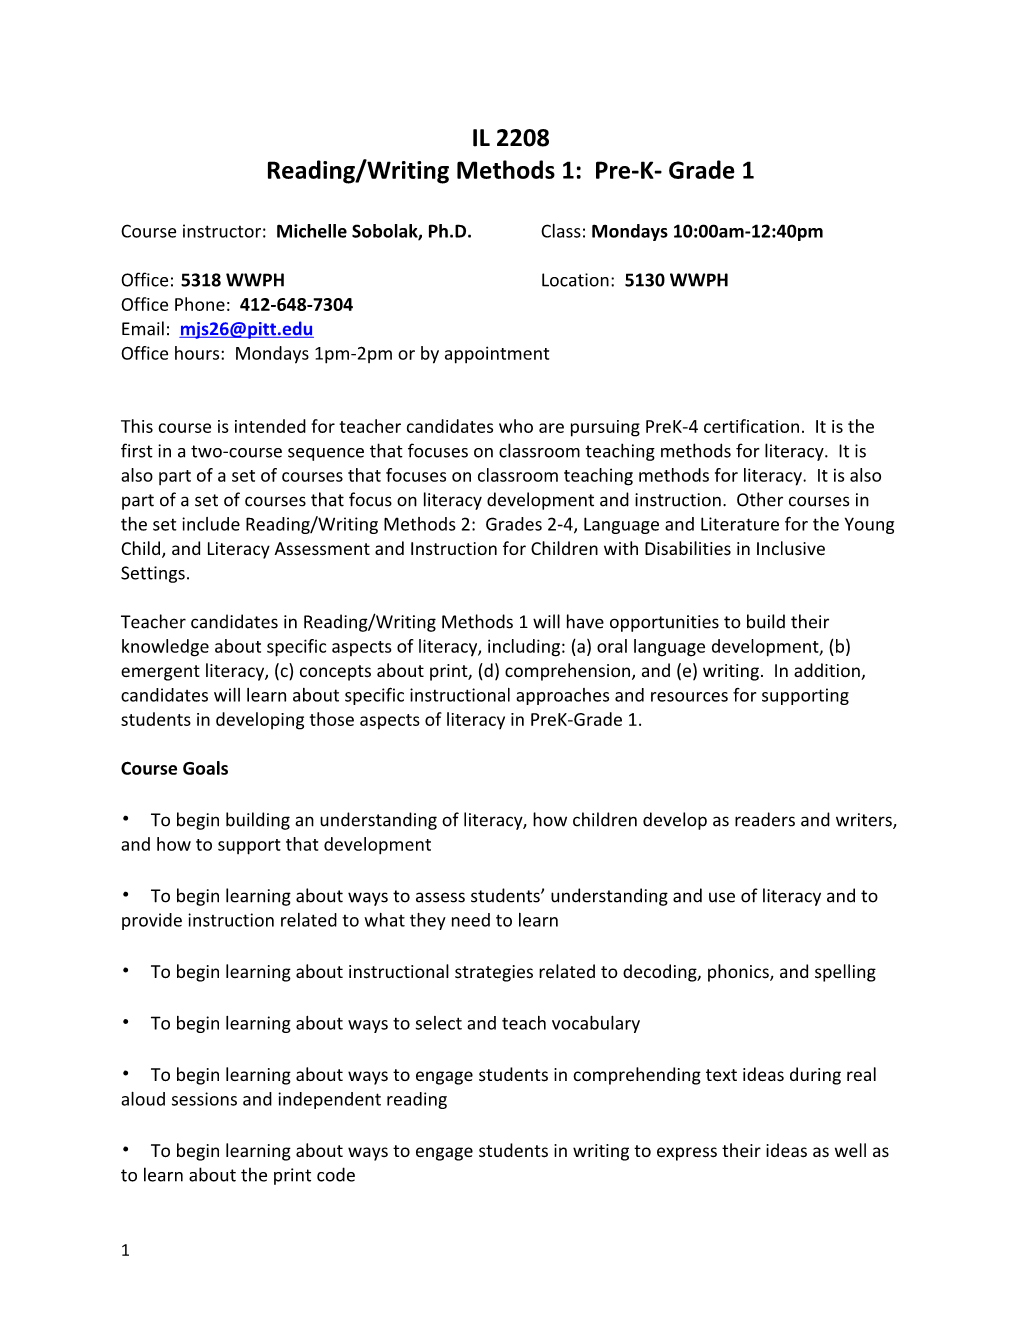 Reading/Writing Methods 1: Pre-K- Grade 1